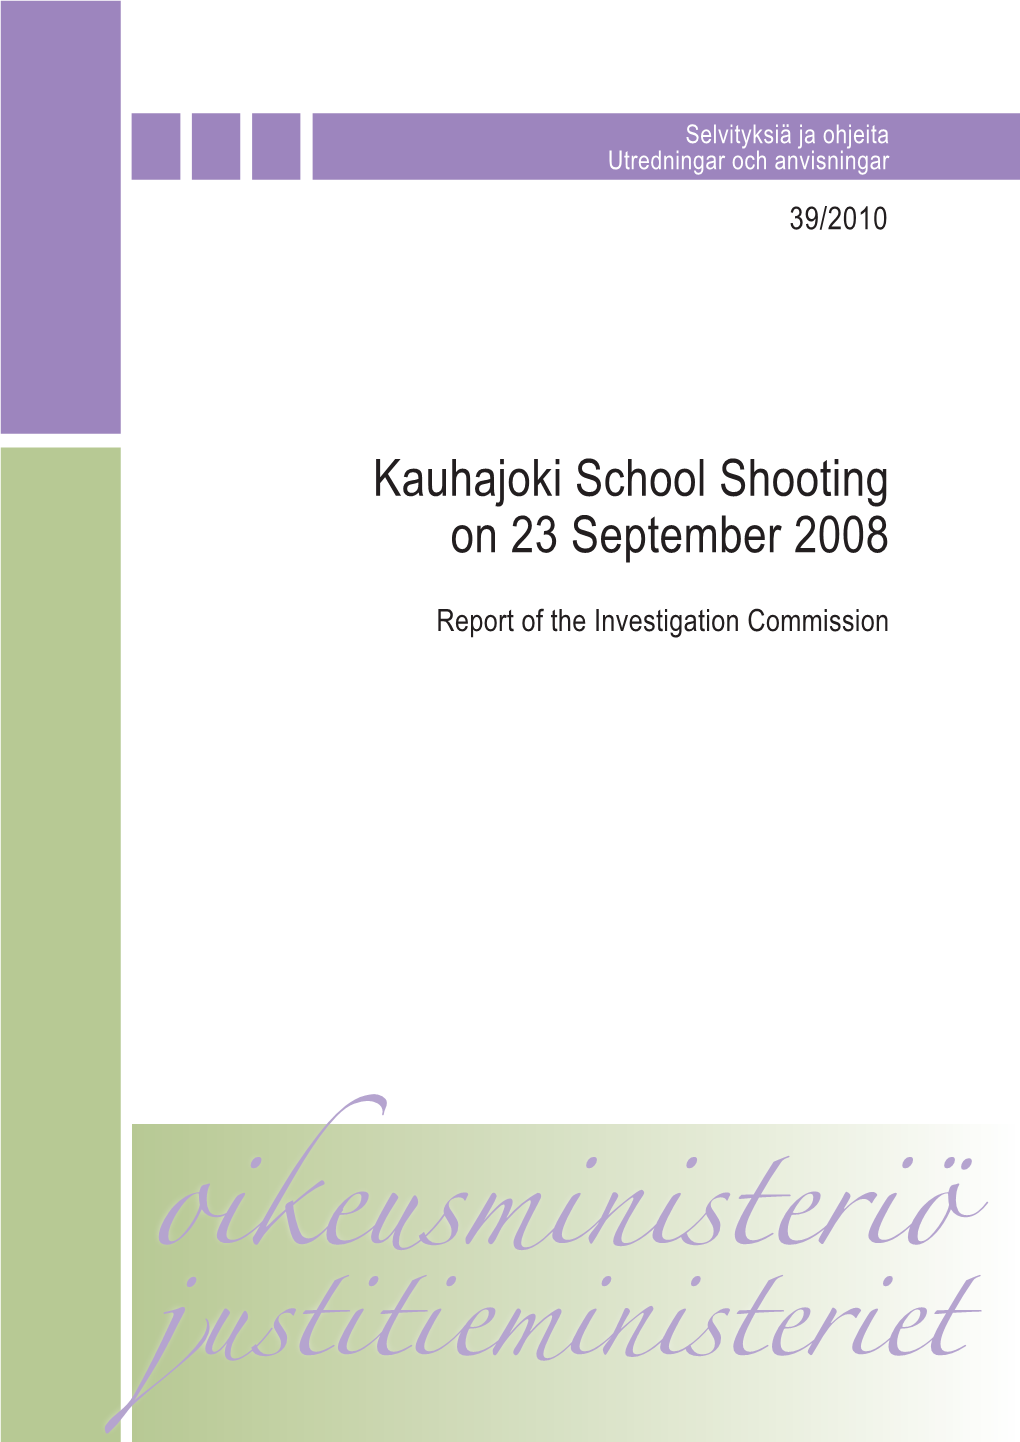 Kauhajoki School Shooting Official Report